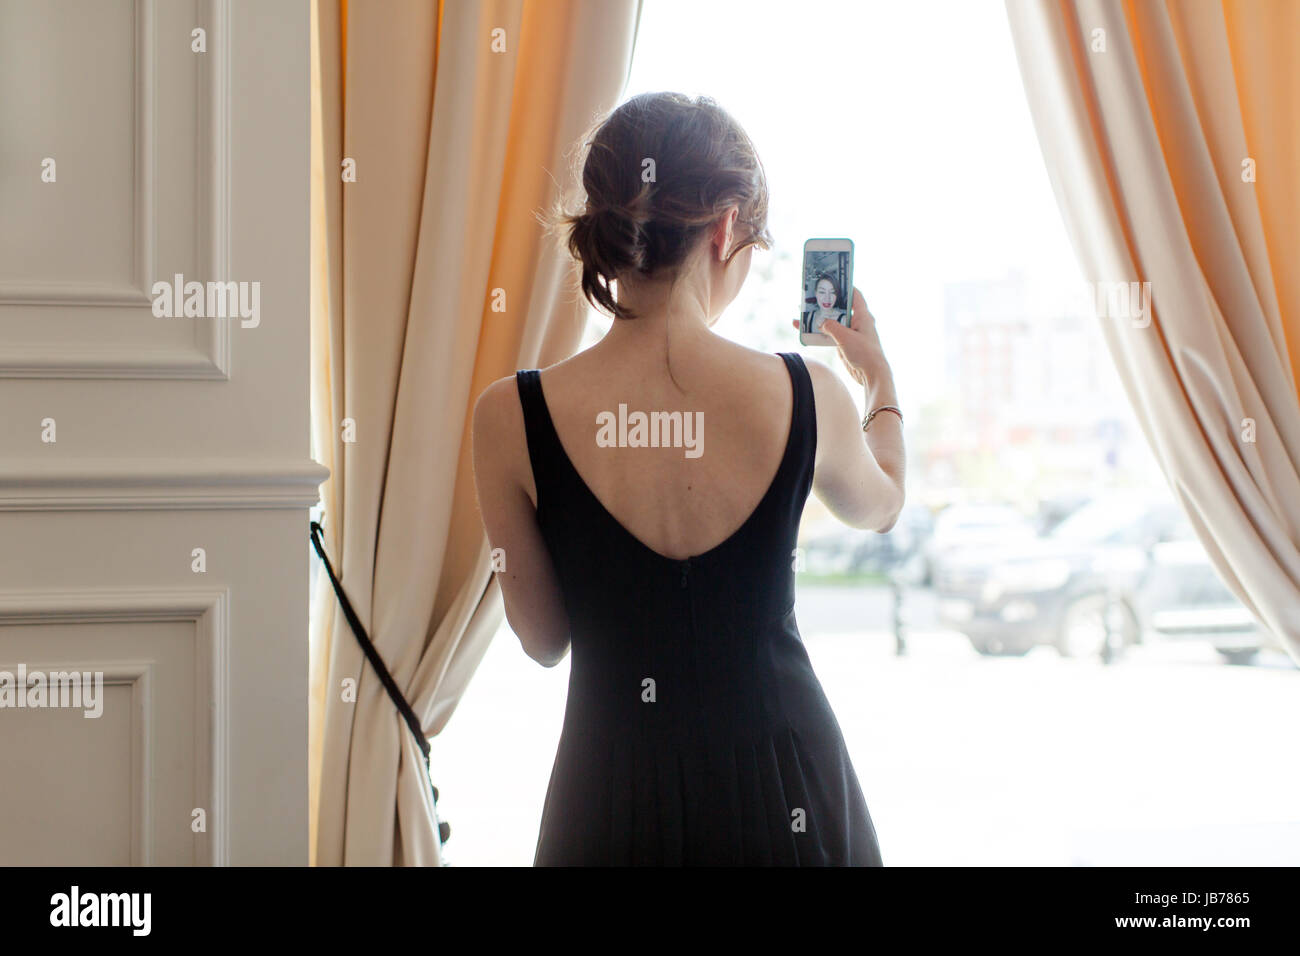 Woman blogger doing selfie at window Stock Photo